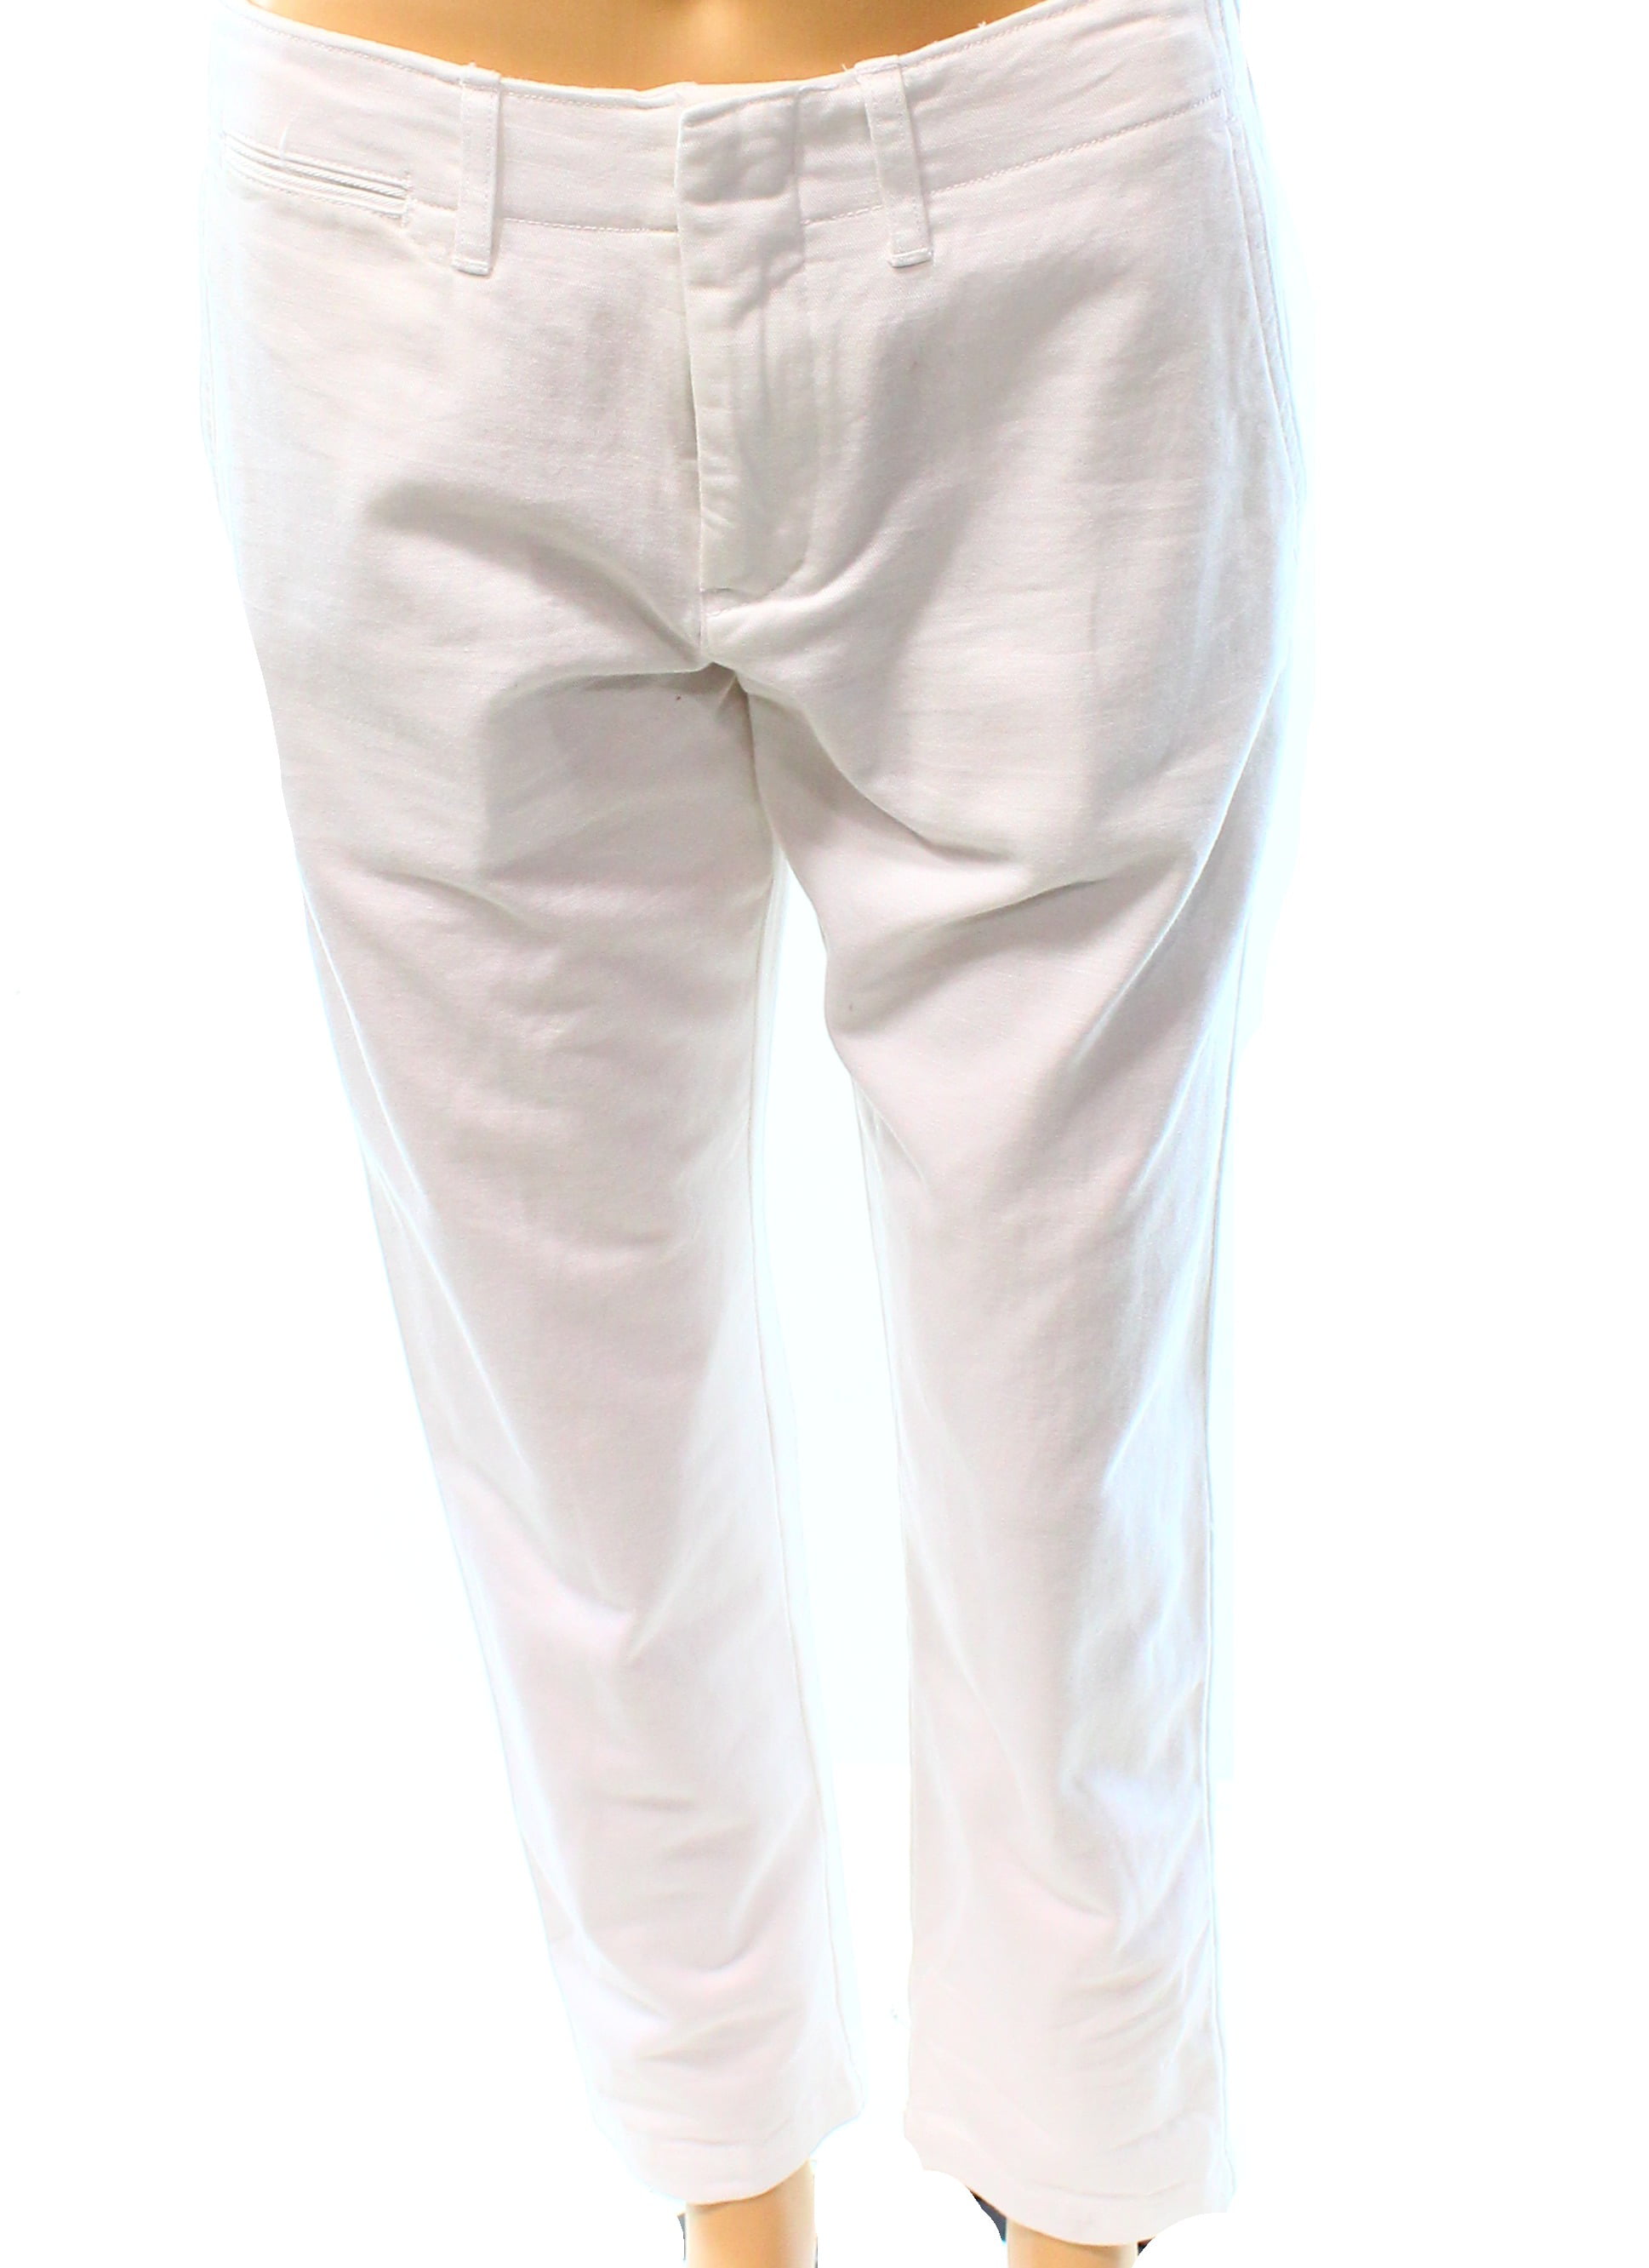 Polo Ralph Lauren - Polo Ralph Lauren NEW White Women's Size 12 Khaki ...